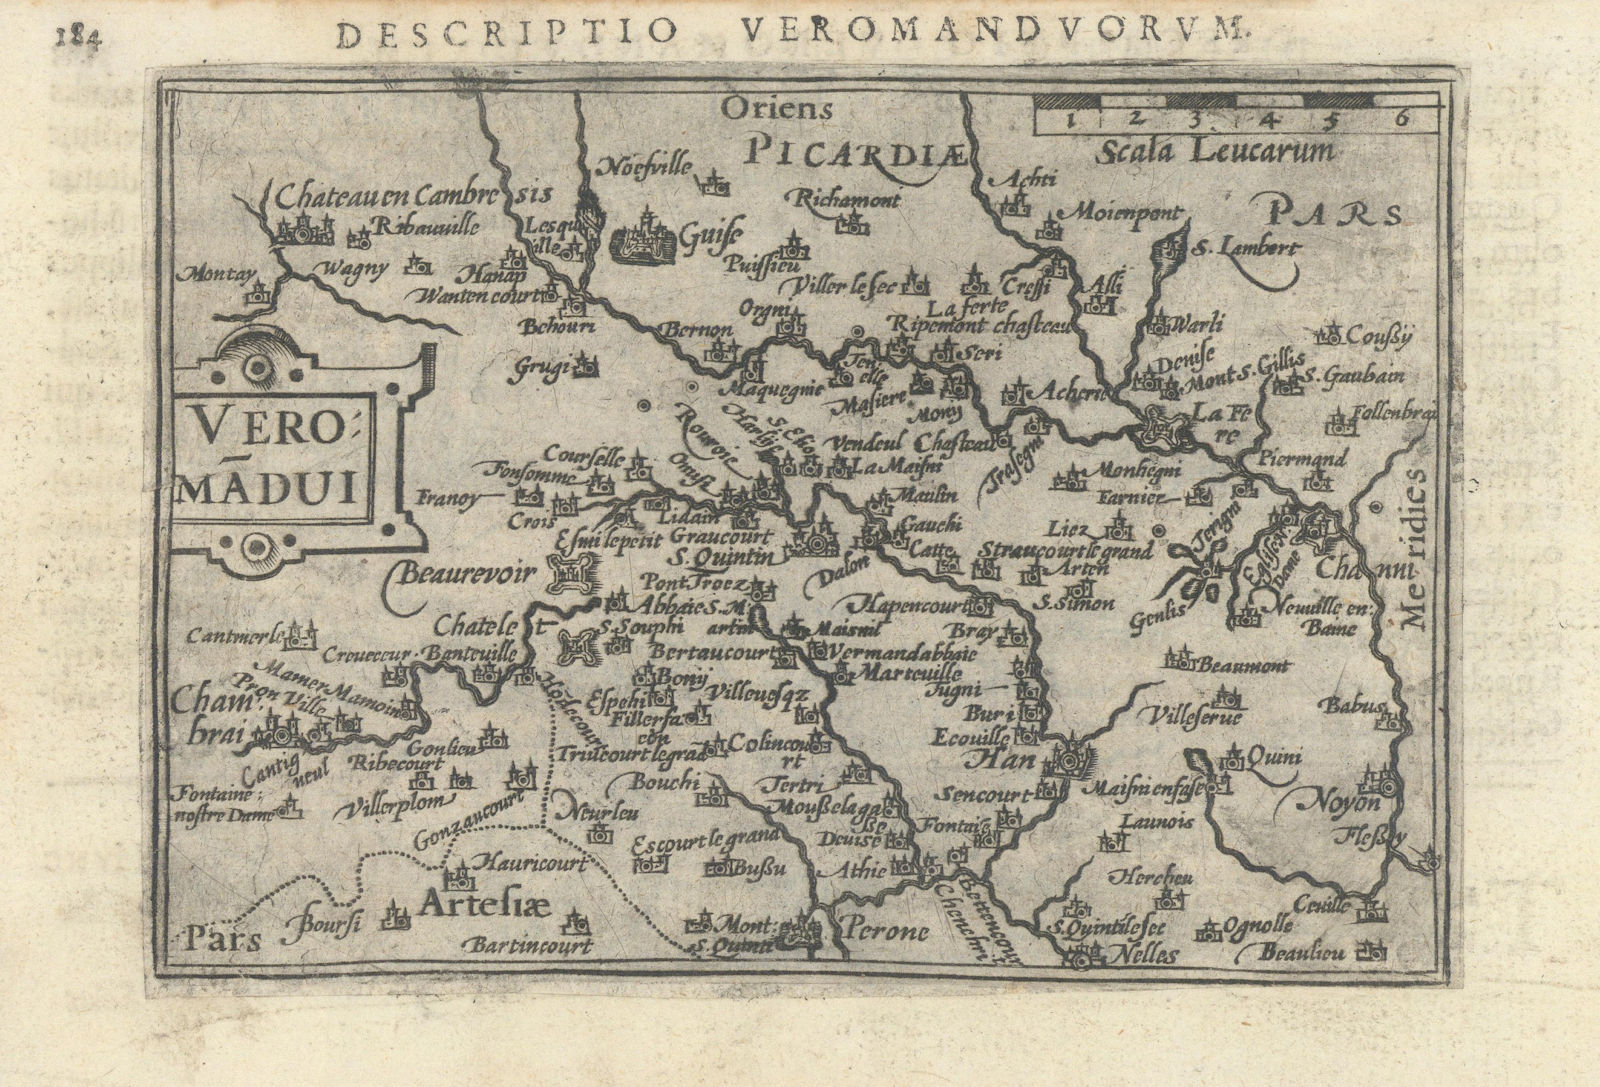 Veromanduorum / Veromandui by Bertius/Langenes. Vermandois Aisne/Somme 1603 map